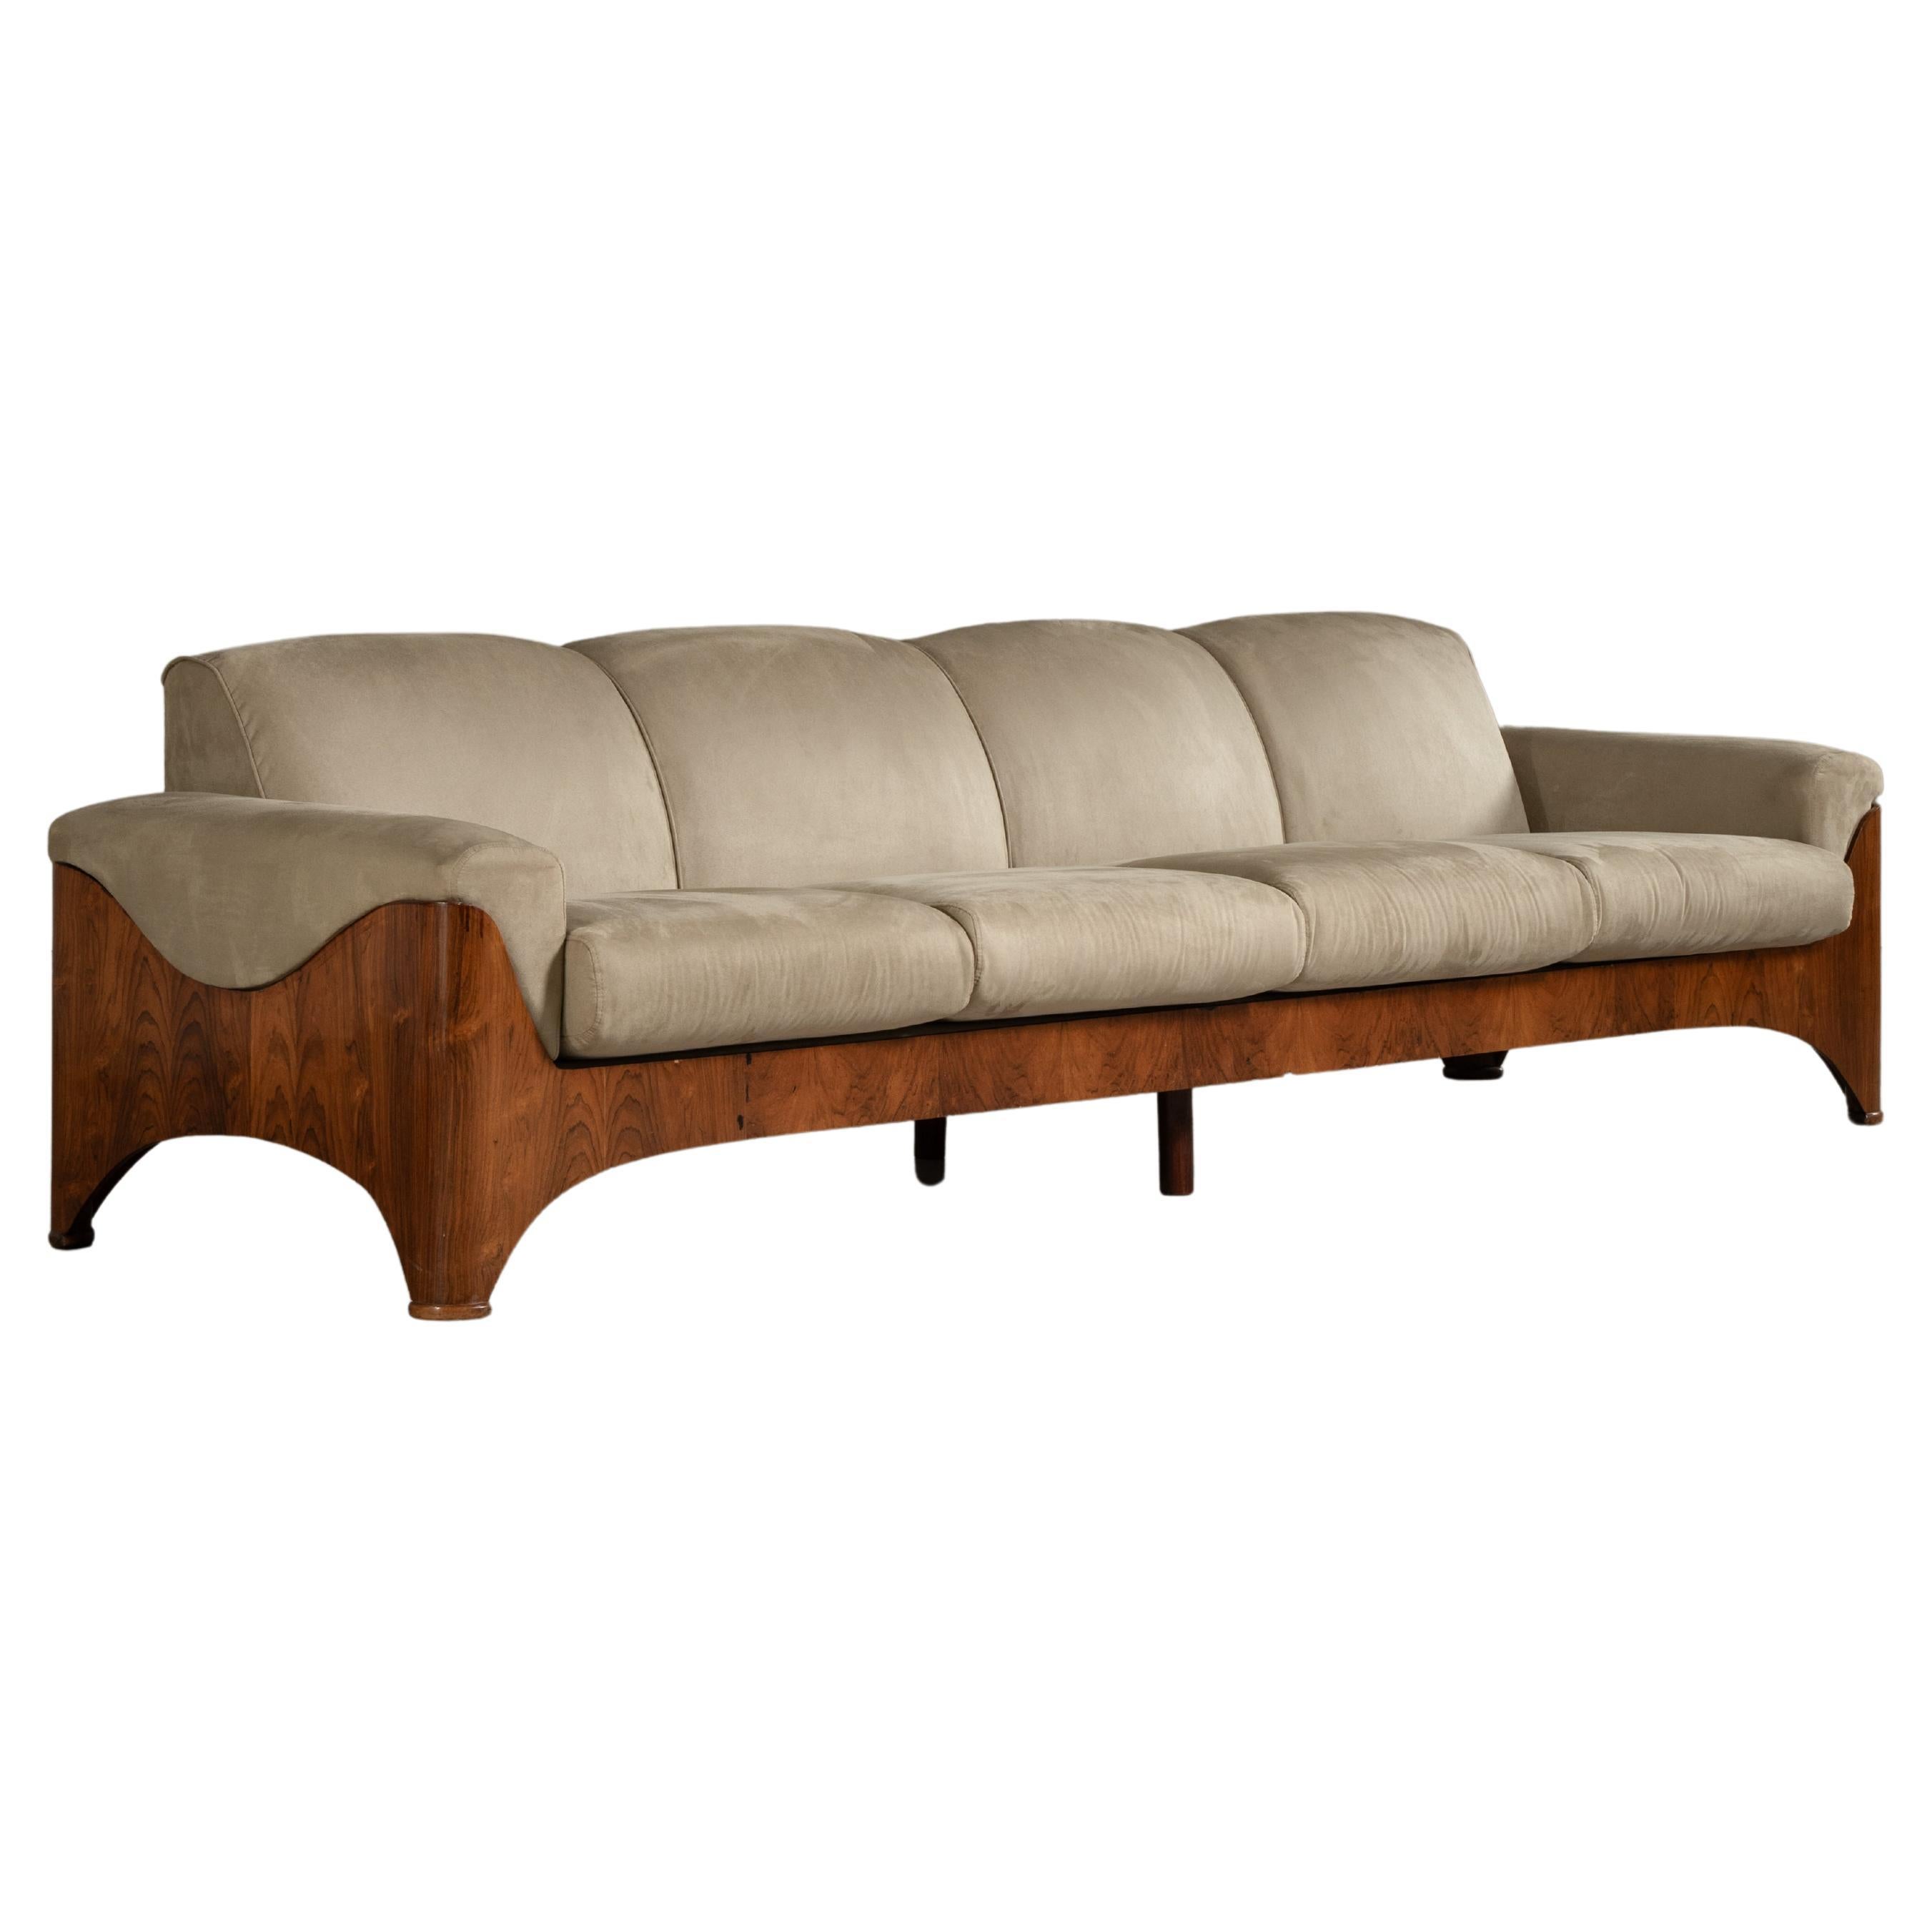 Curvilineal Four-Seater Sofa in Veneered Tropical Hardwood, Brazilian Modernism For Sale